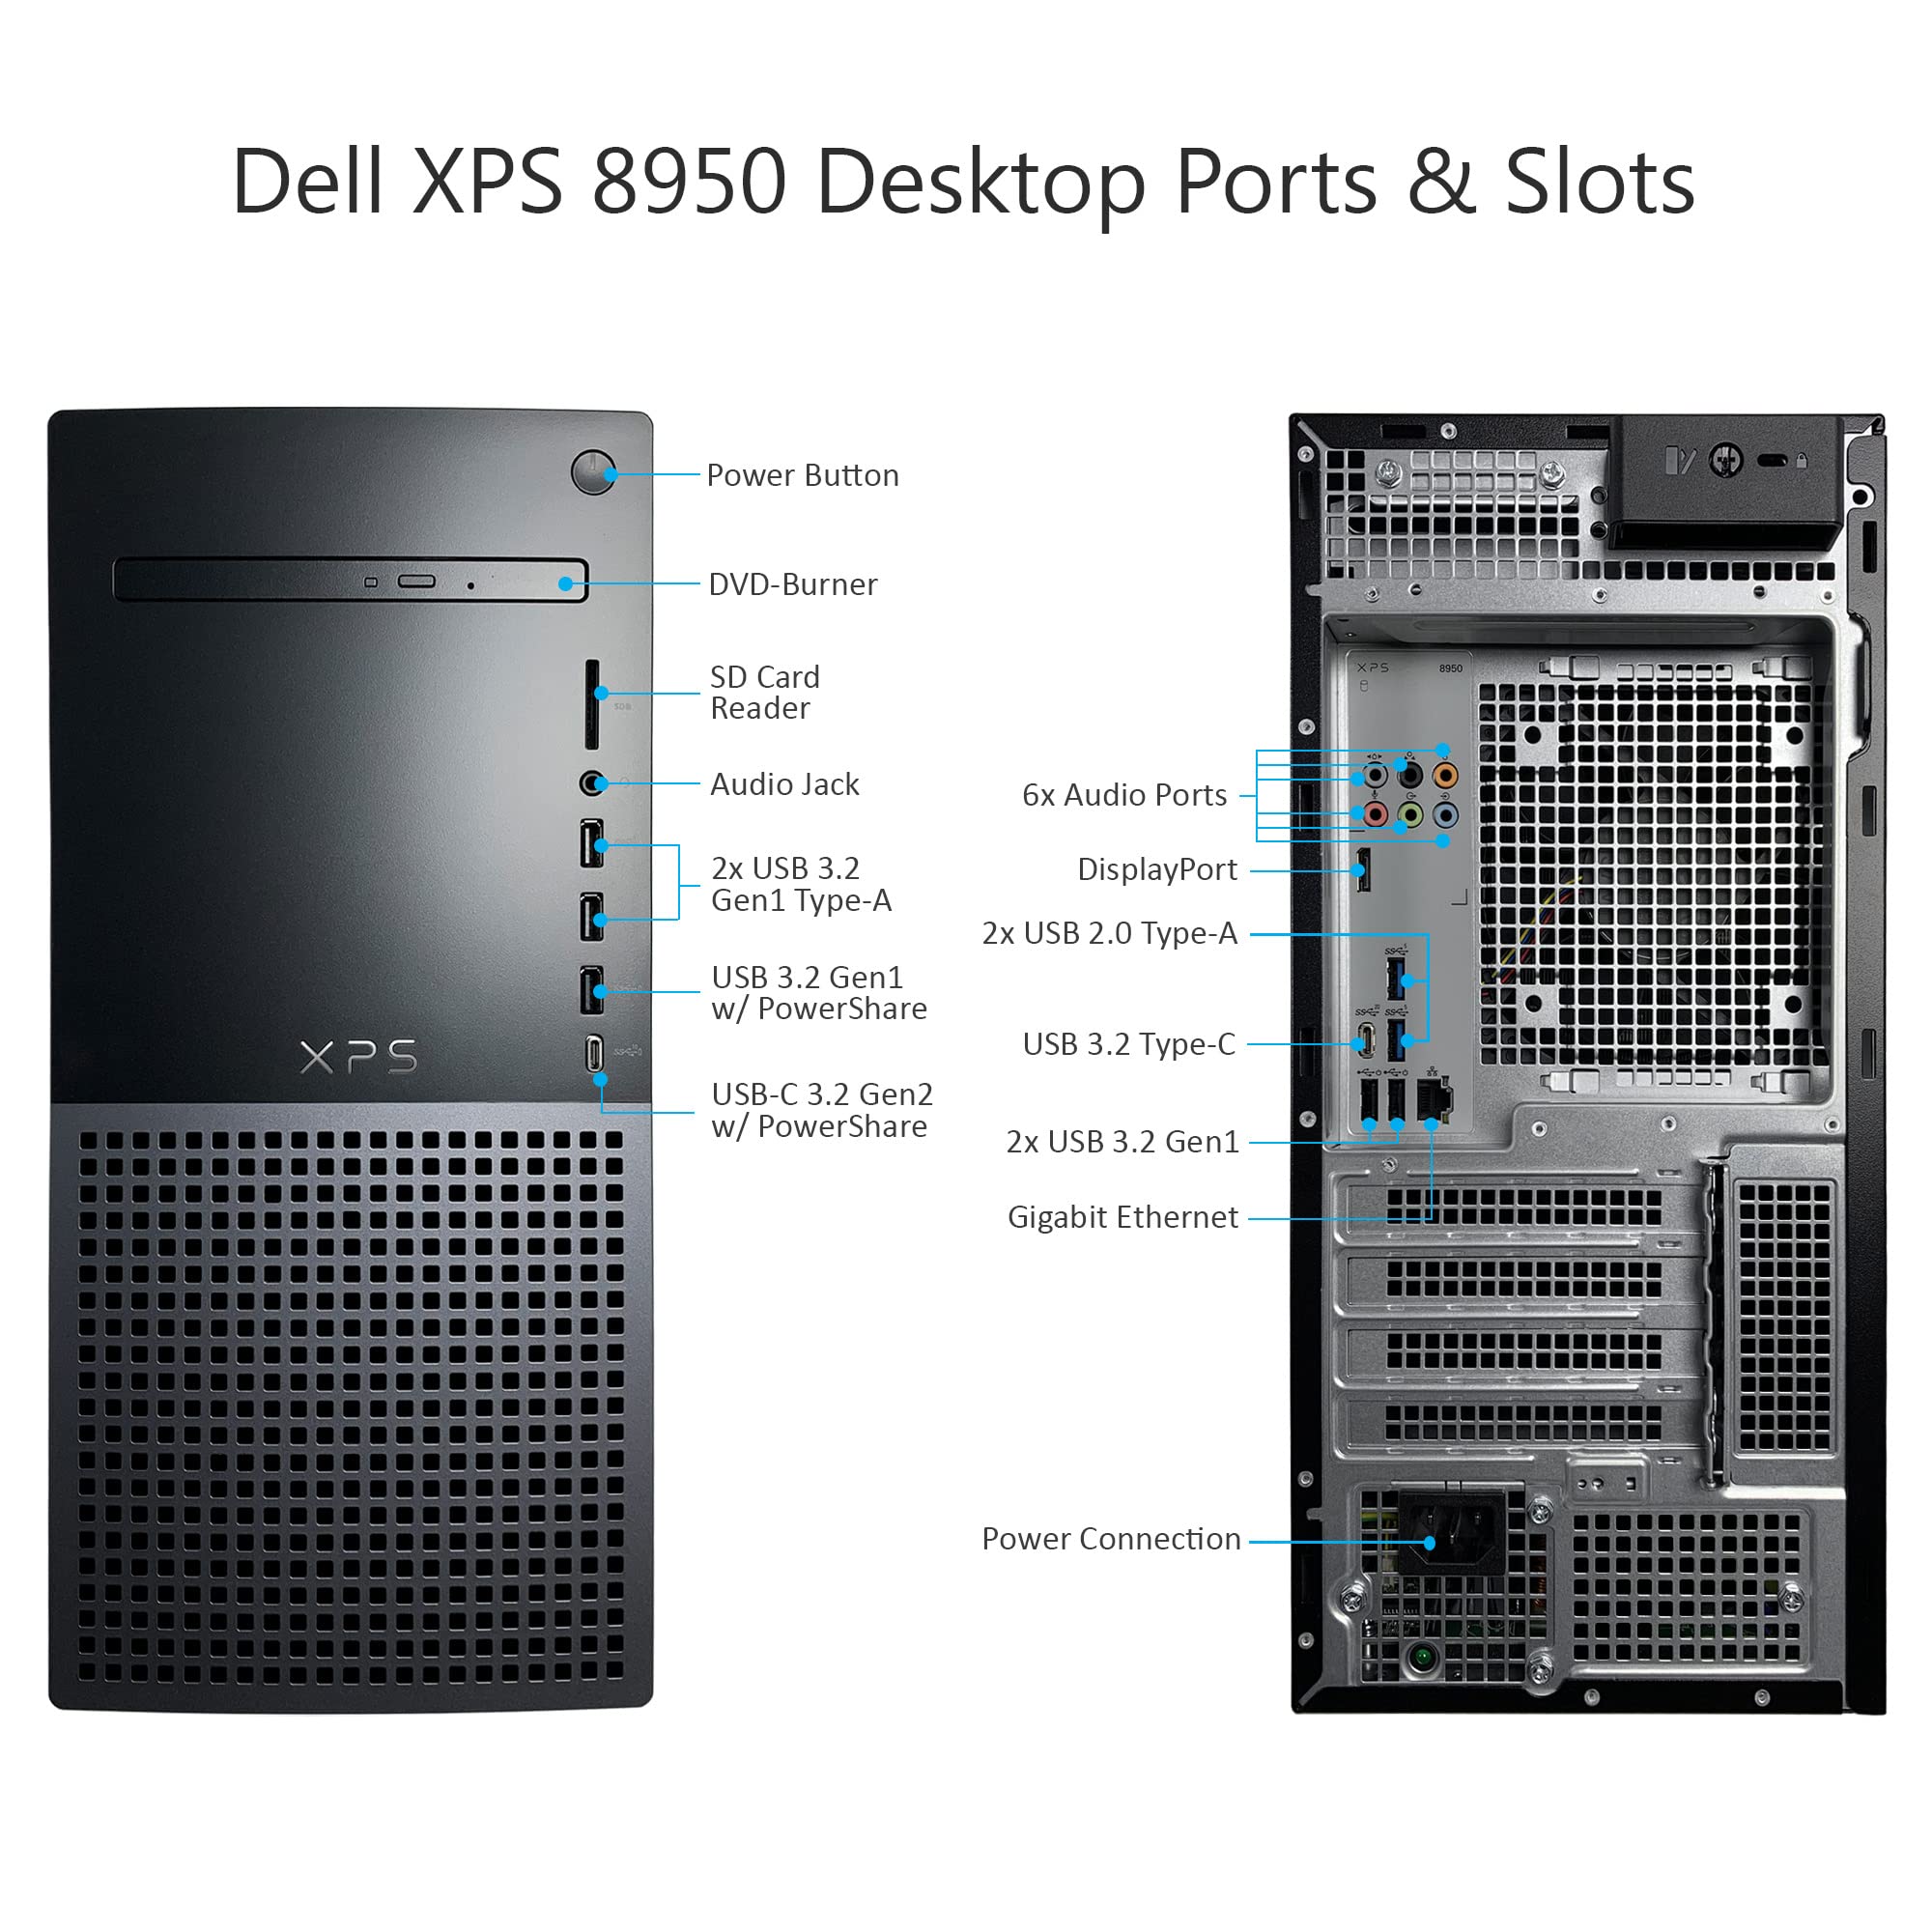 Dell XPS 8950 Desktop Computer - 12th Gen Intel Core i7-12700K up to 5.0 GHz CPU, 128GB RAM, 1TB NVMe SSD + 1TB HDD, Intel UHD Graphics 770, Killer Wi-Fi 6, DVD Burner, Windows 11 Home